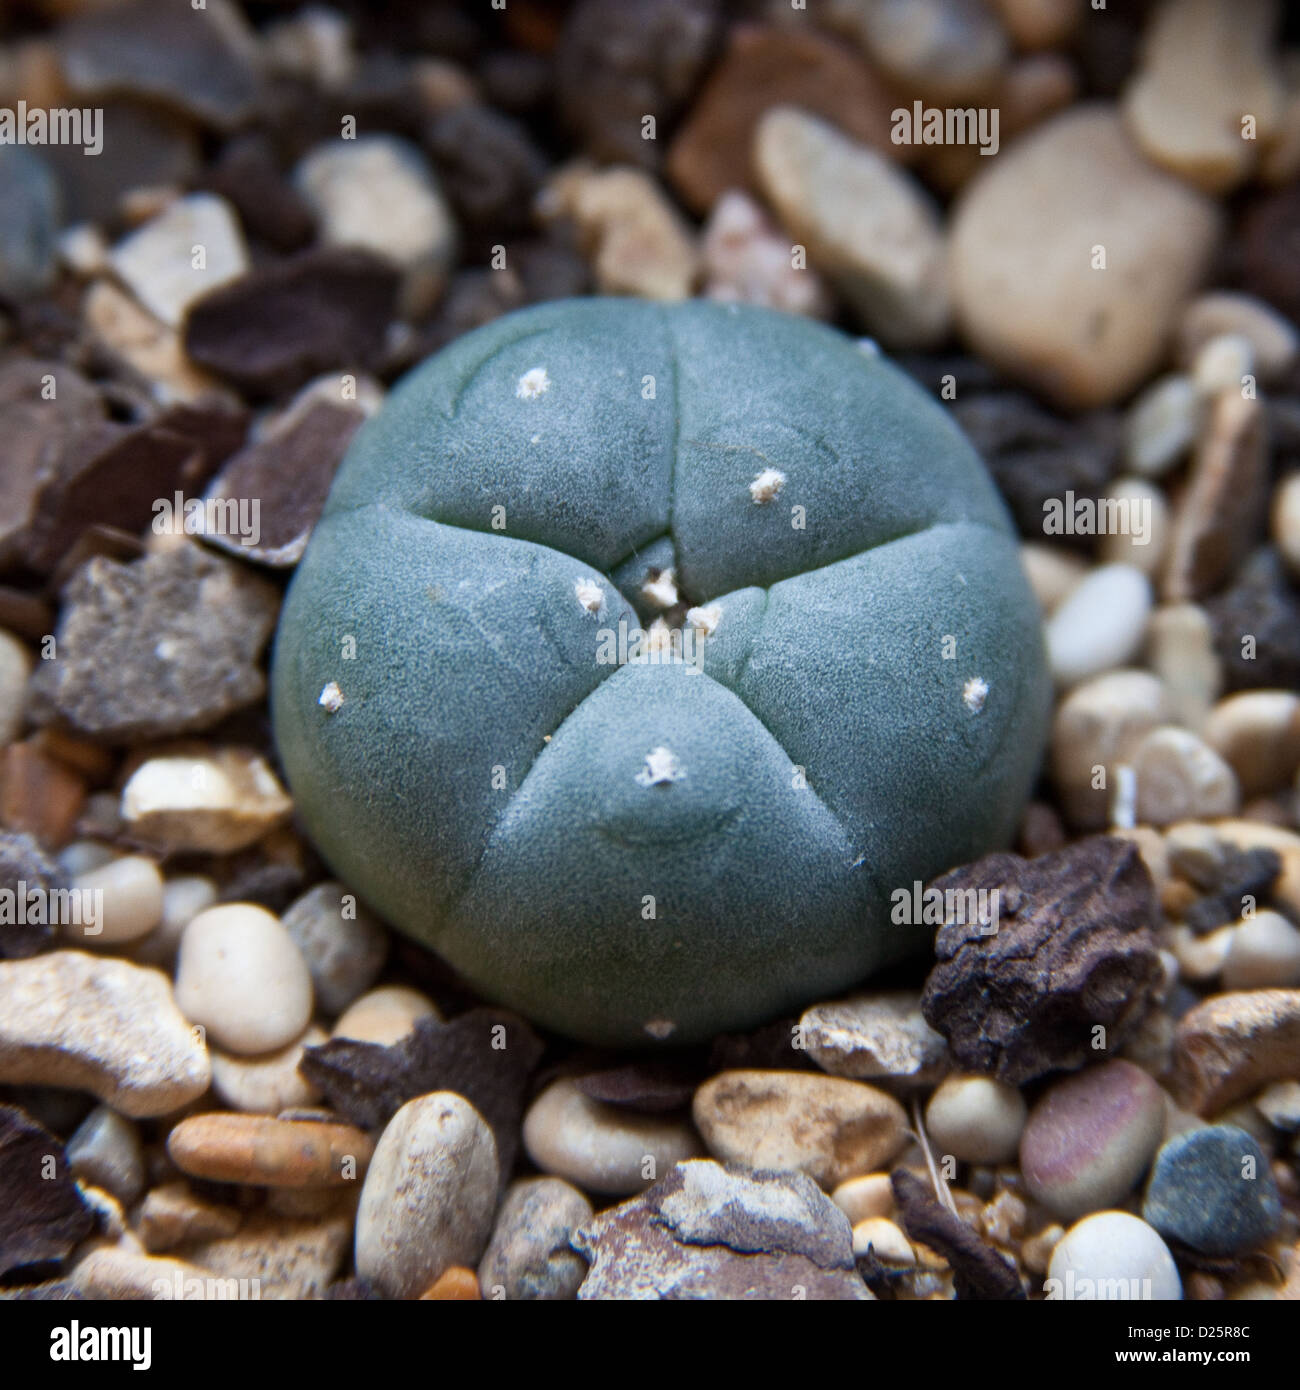 Peyote Cactus (Lophophora williamsii) containing the hallucinogenic drug mescaline. Stock Photo